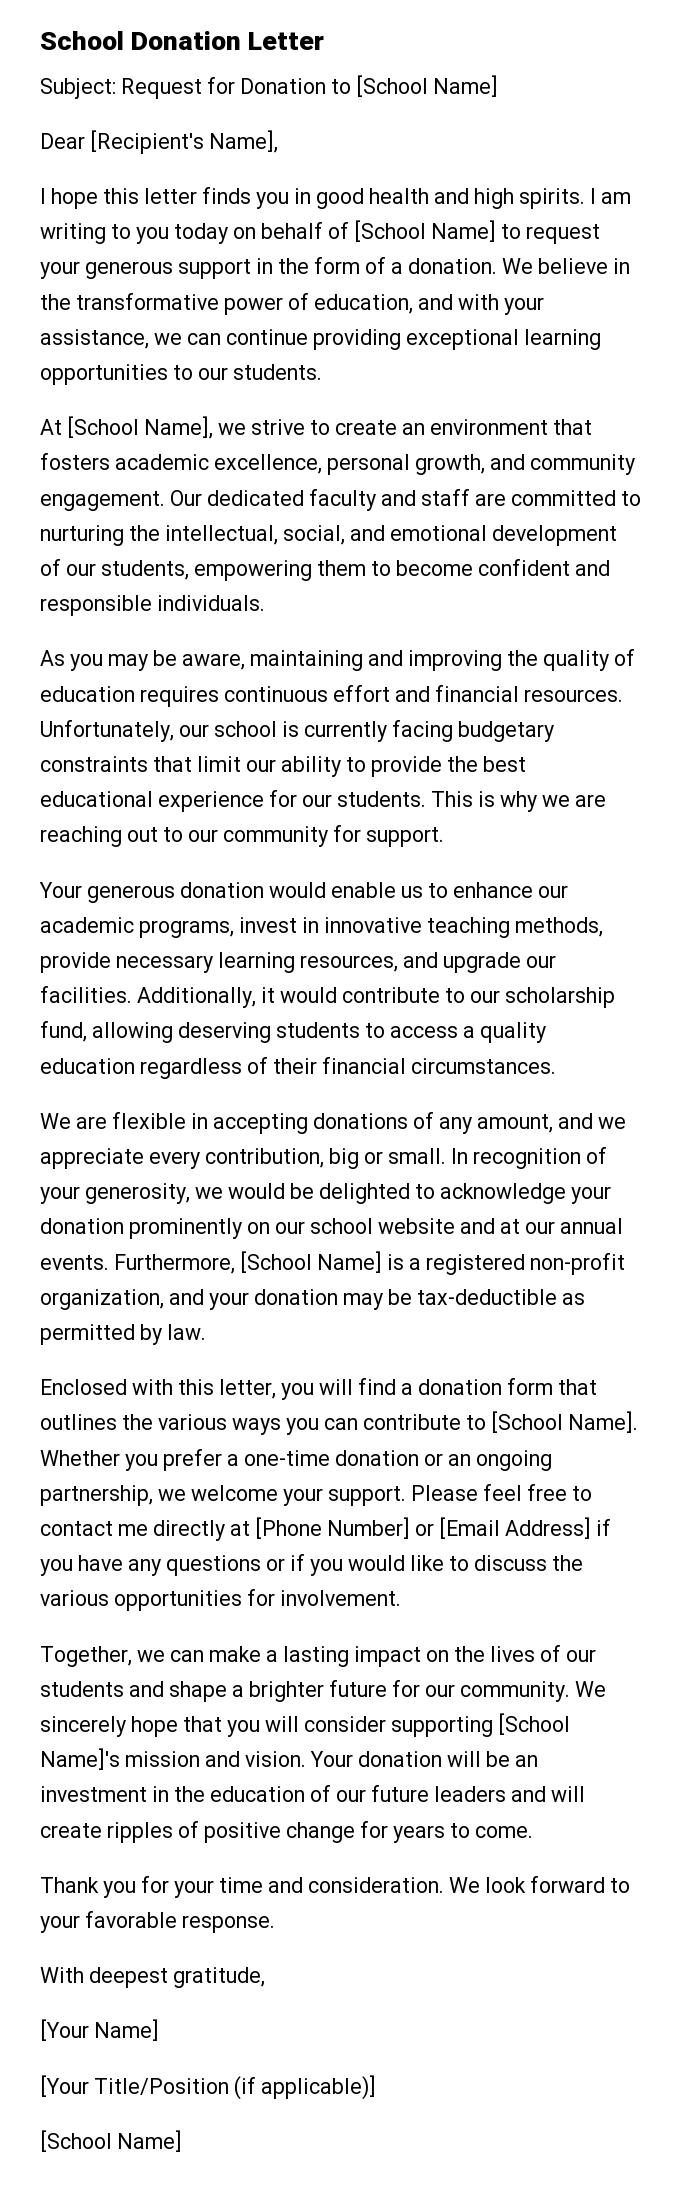 School Donation Letter